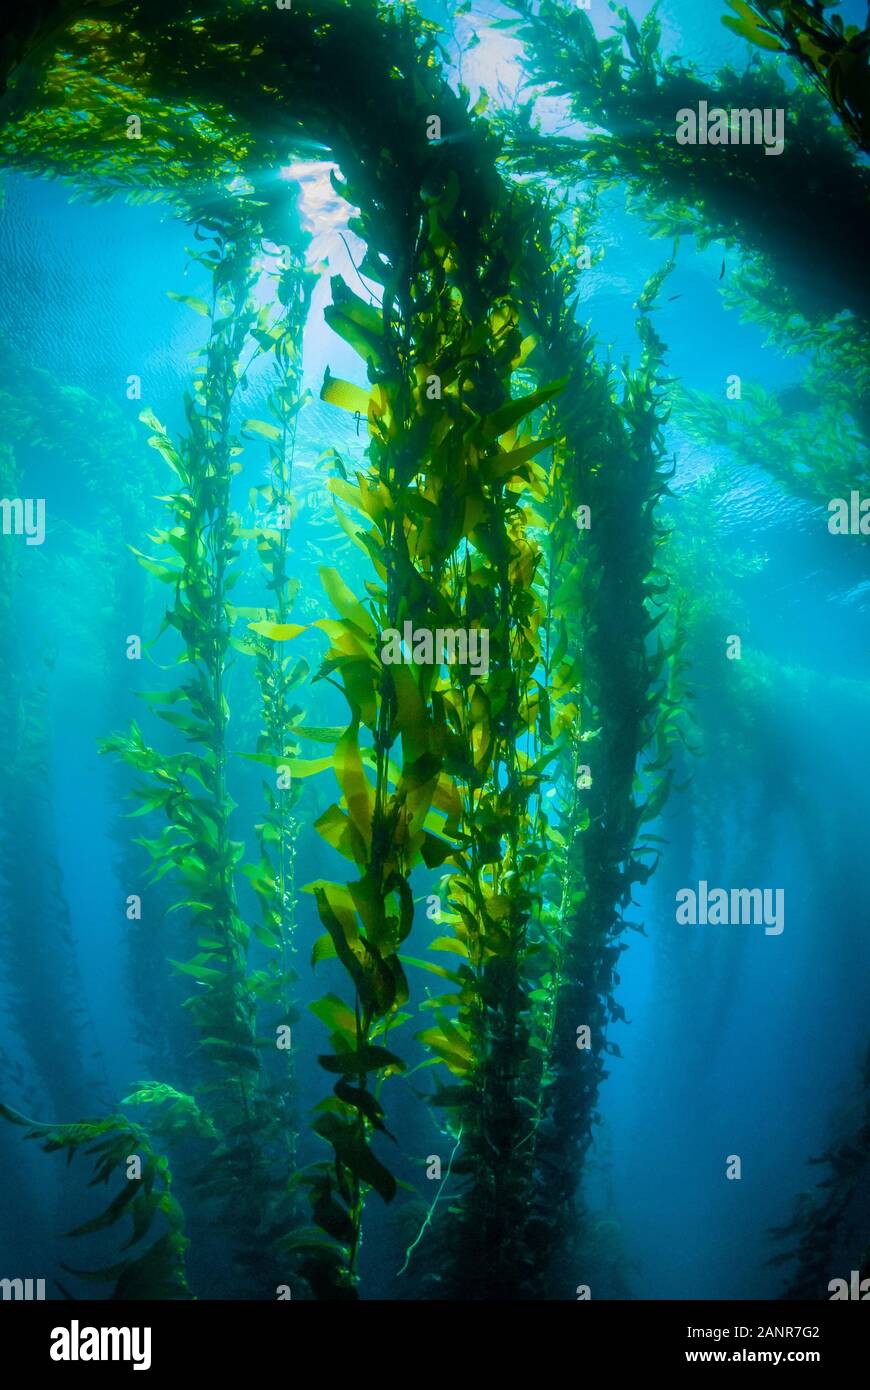 Altos tallos verdes de quelpo se levantan del agua azul en el bosque de kelp en Point Loma, California. Foto de stock